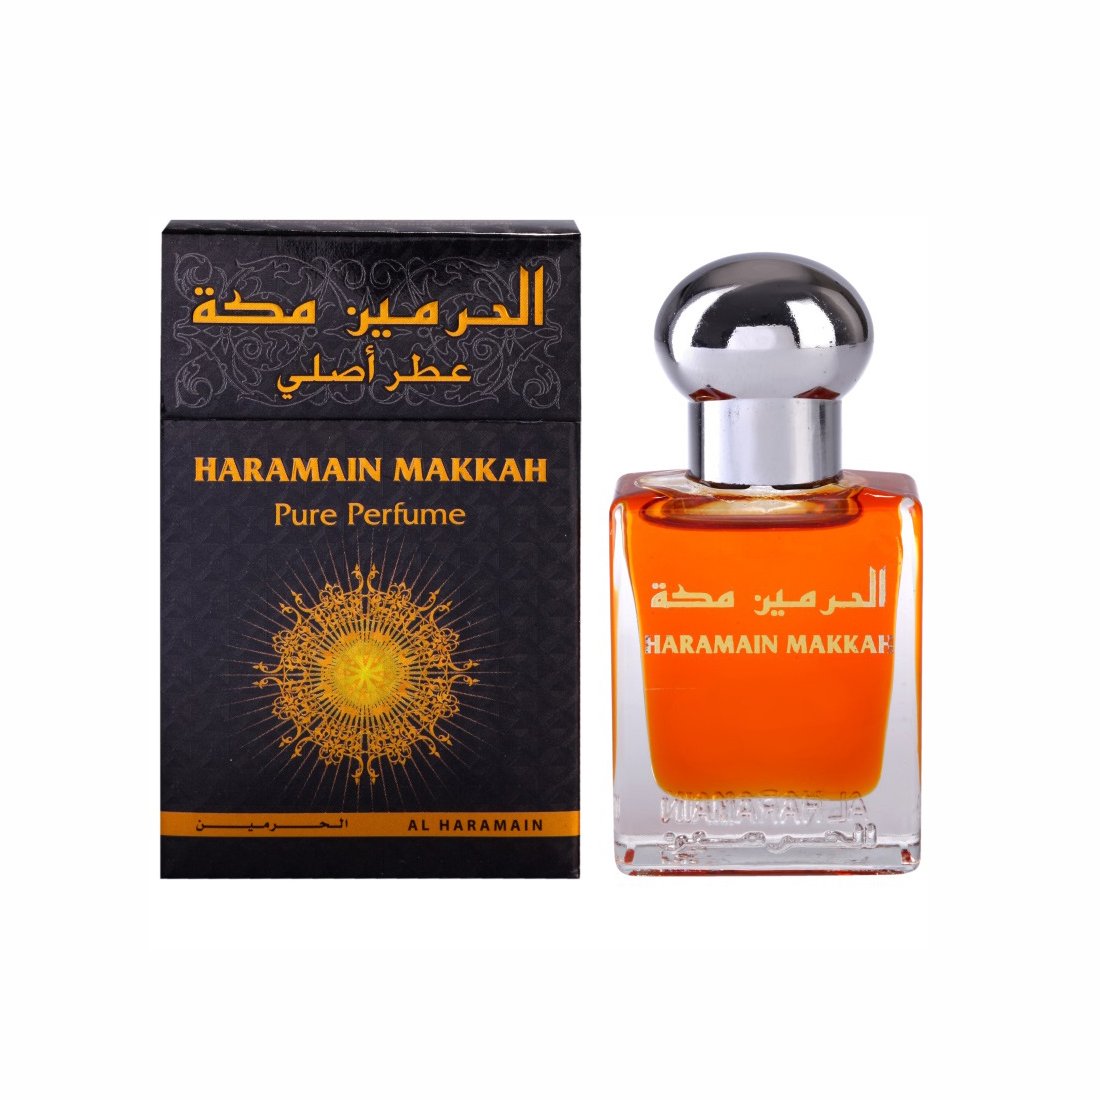 Al Haramain Makkah Fragrance Pure Original Roll on Perfume Oil (Attar) - 15 ml